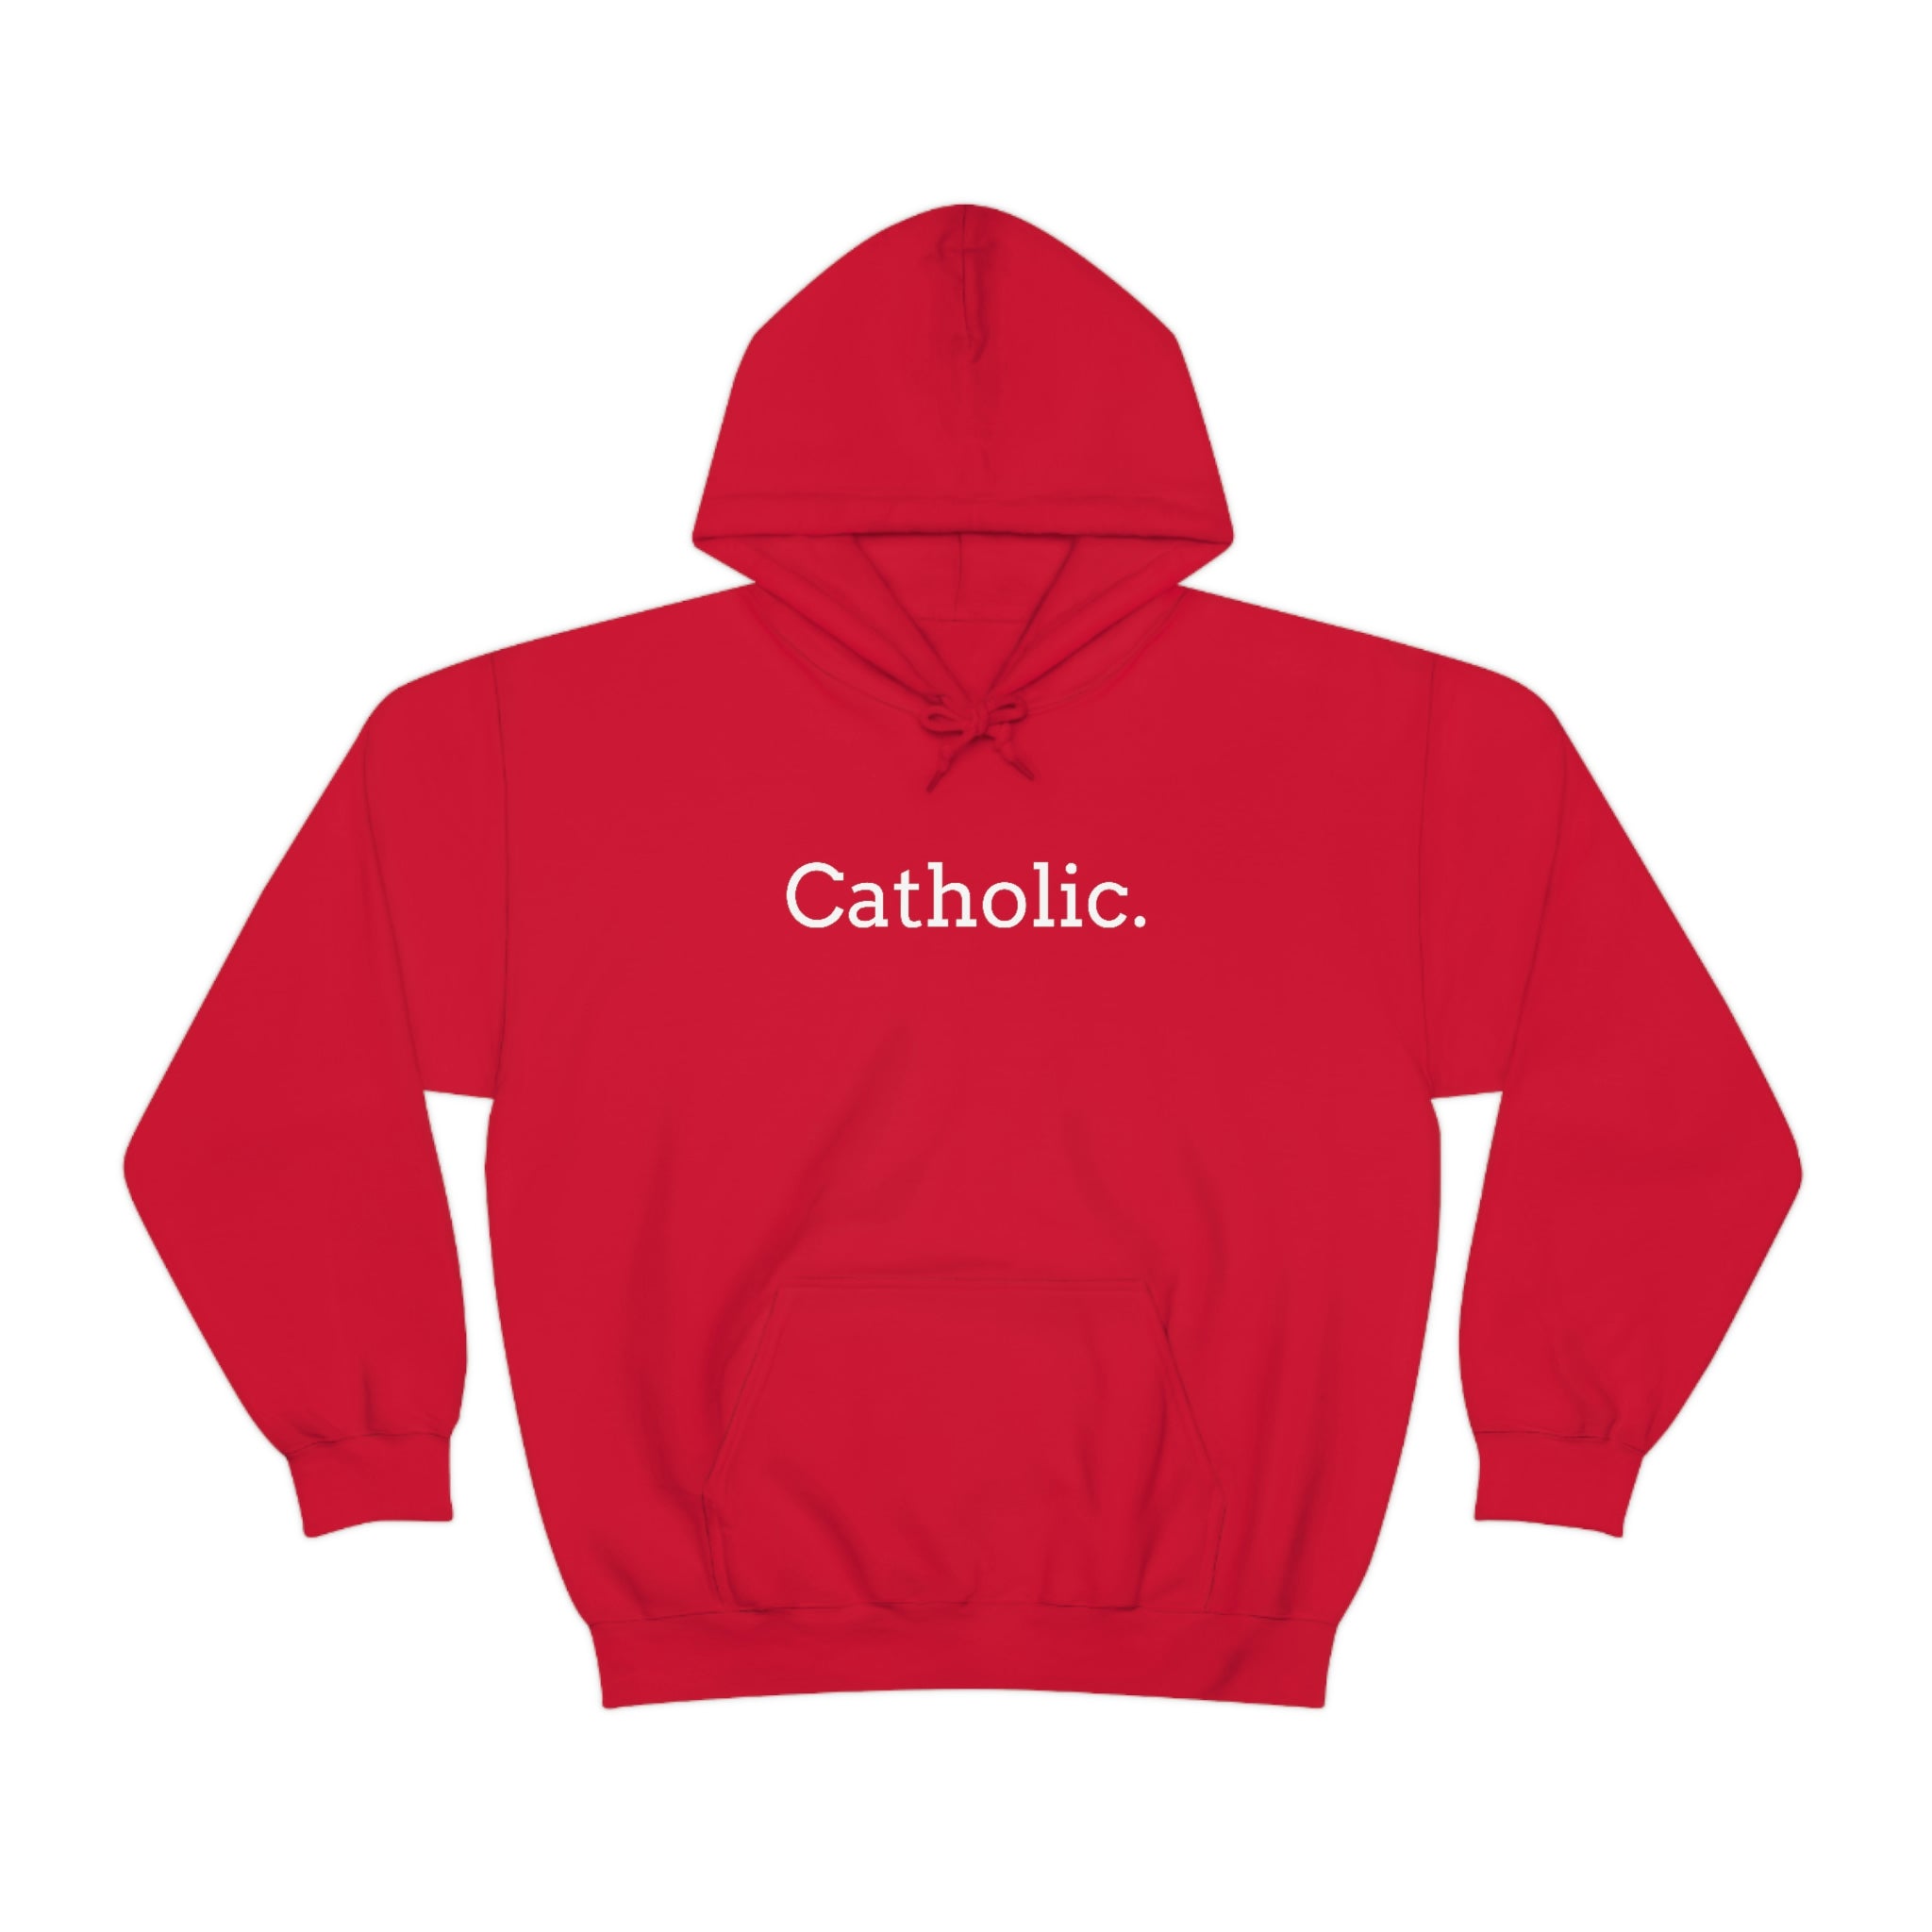 The Catholic University of America Mens Hoodies, The Catholic